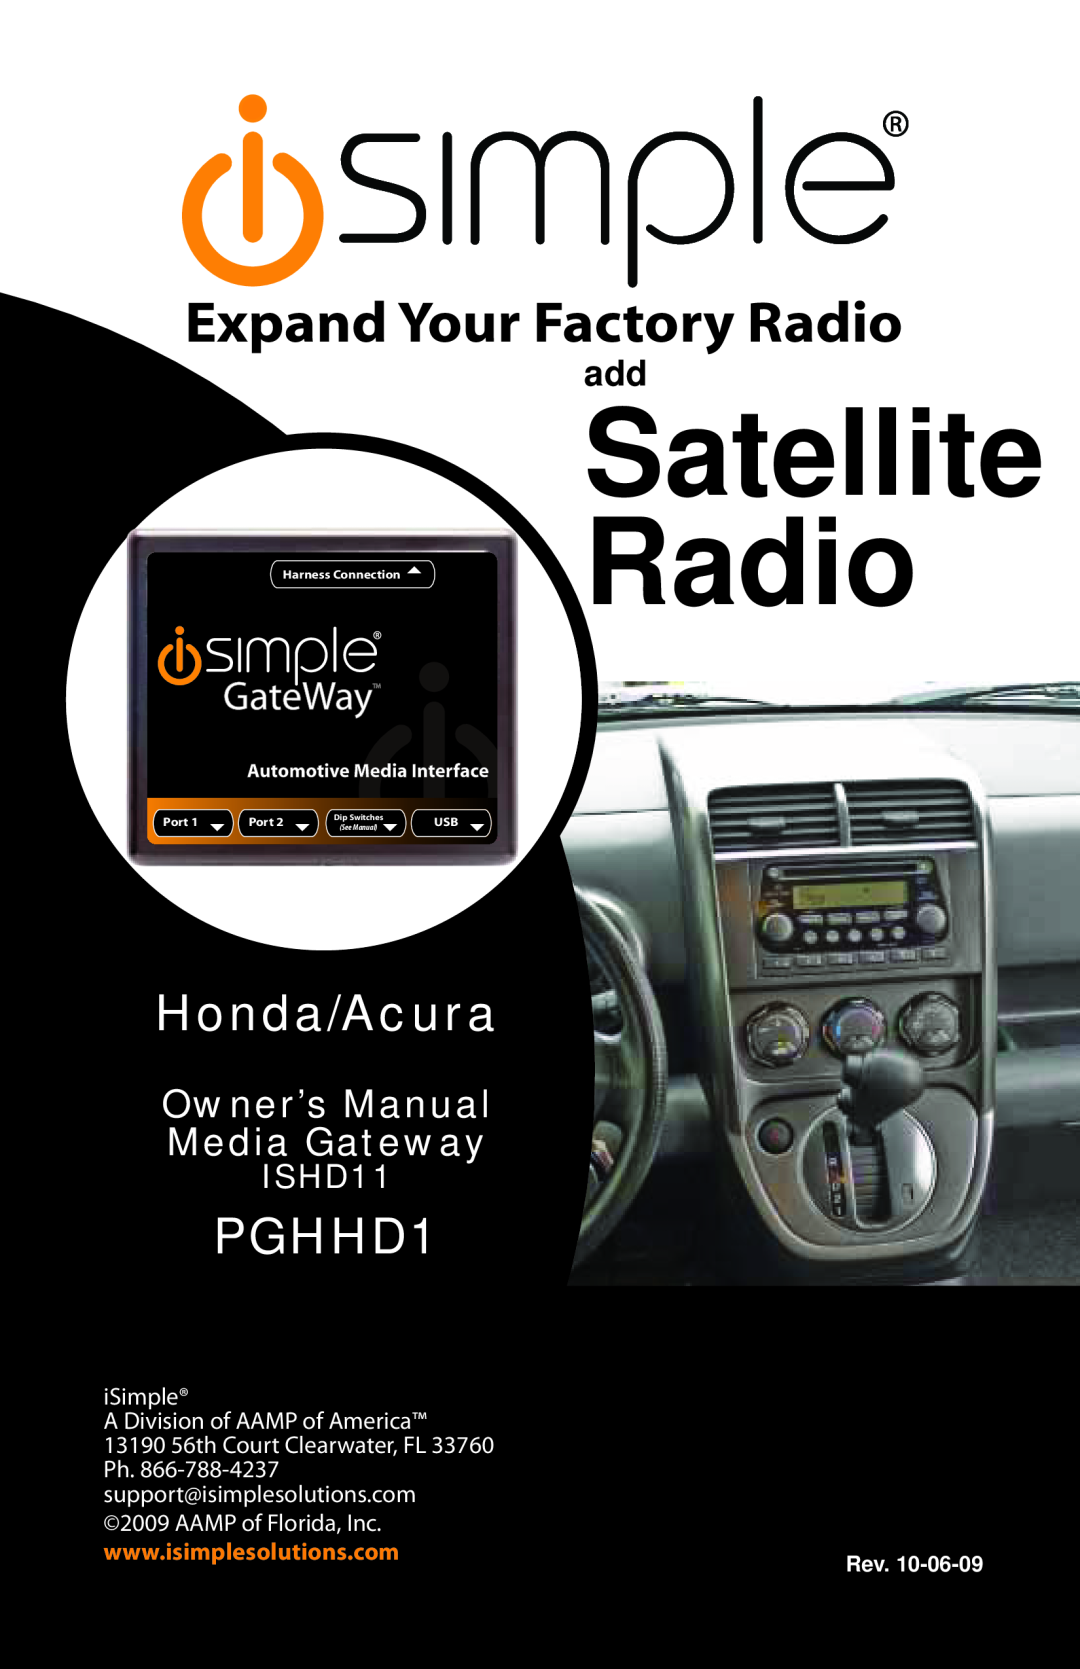 iSimple ISHD11 owner manual Satellite Radio, Owner’sManual, Expand Your Factory Radio, Honda/Acura, Pxamg, iSimple, Rev 